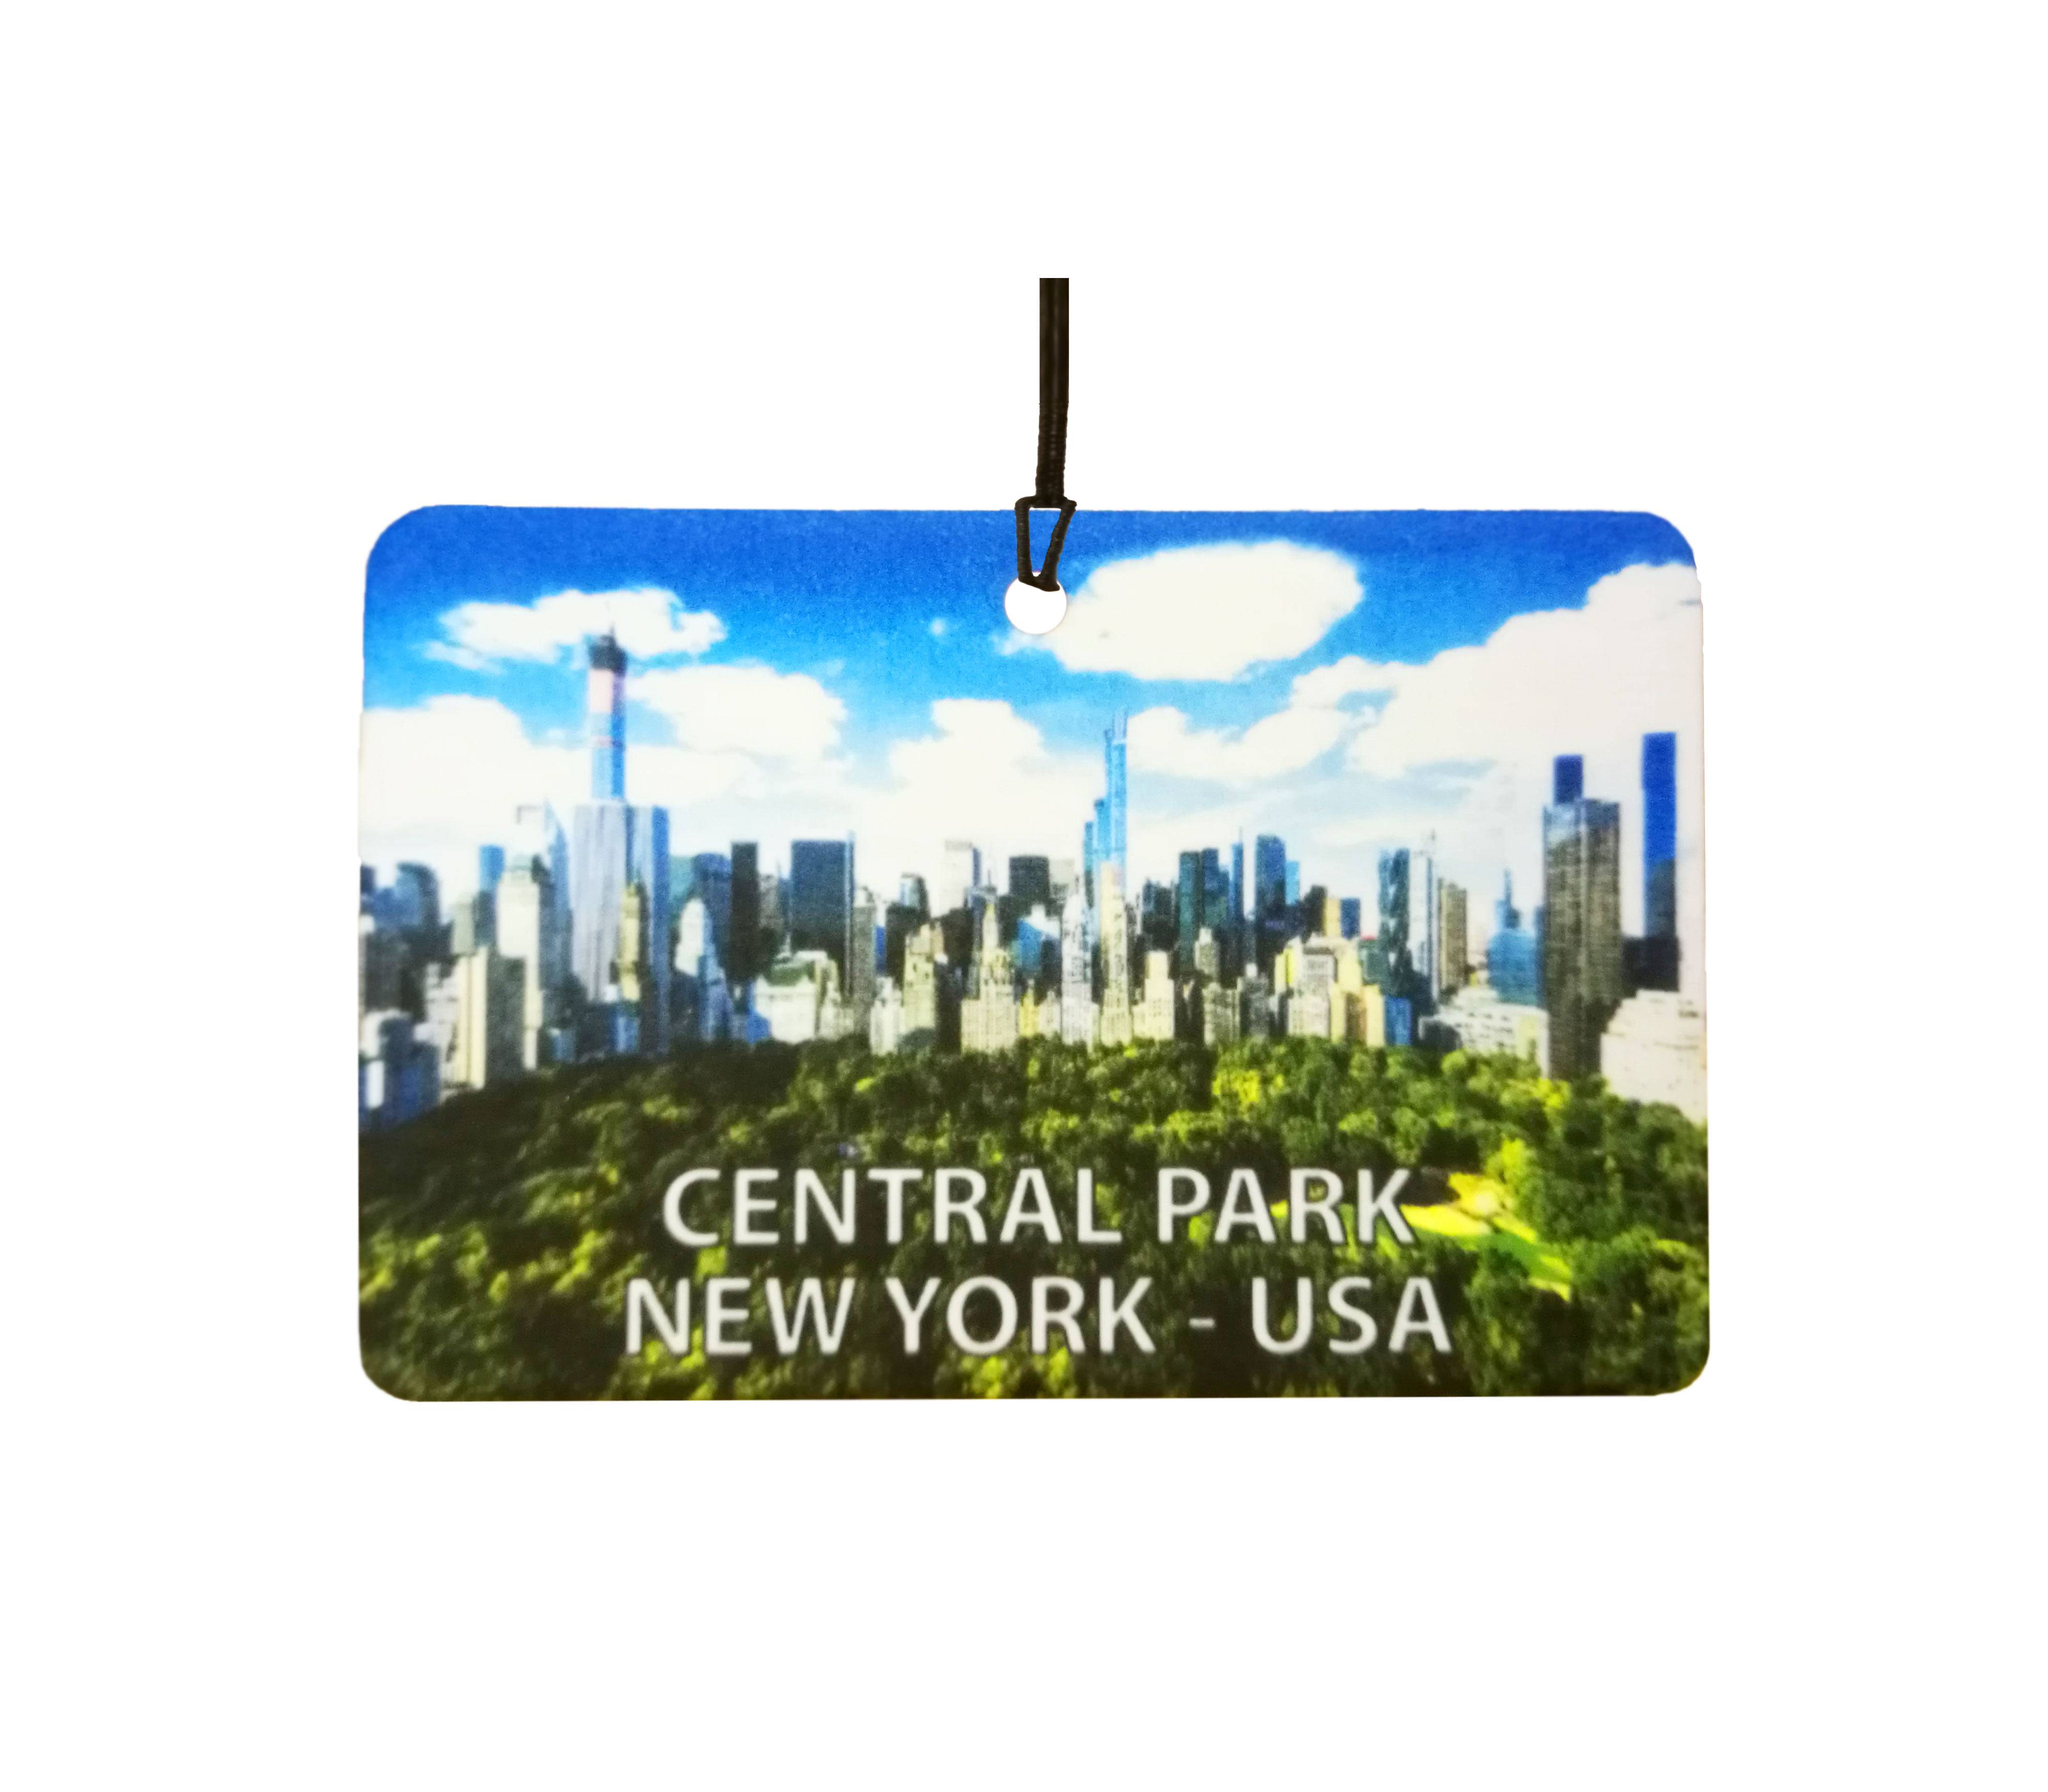 Central Park - New York - USA